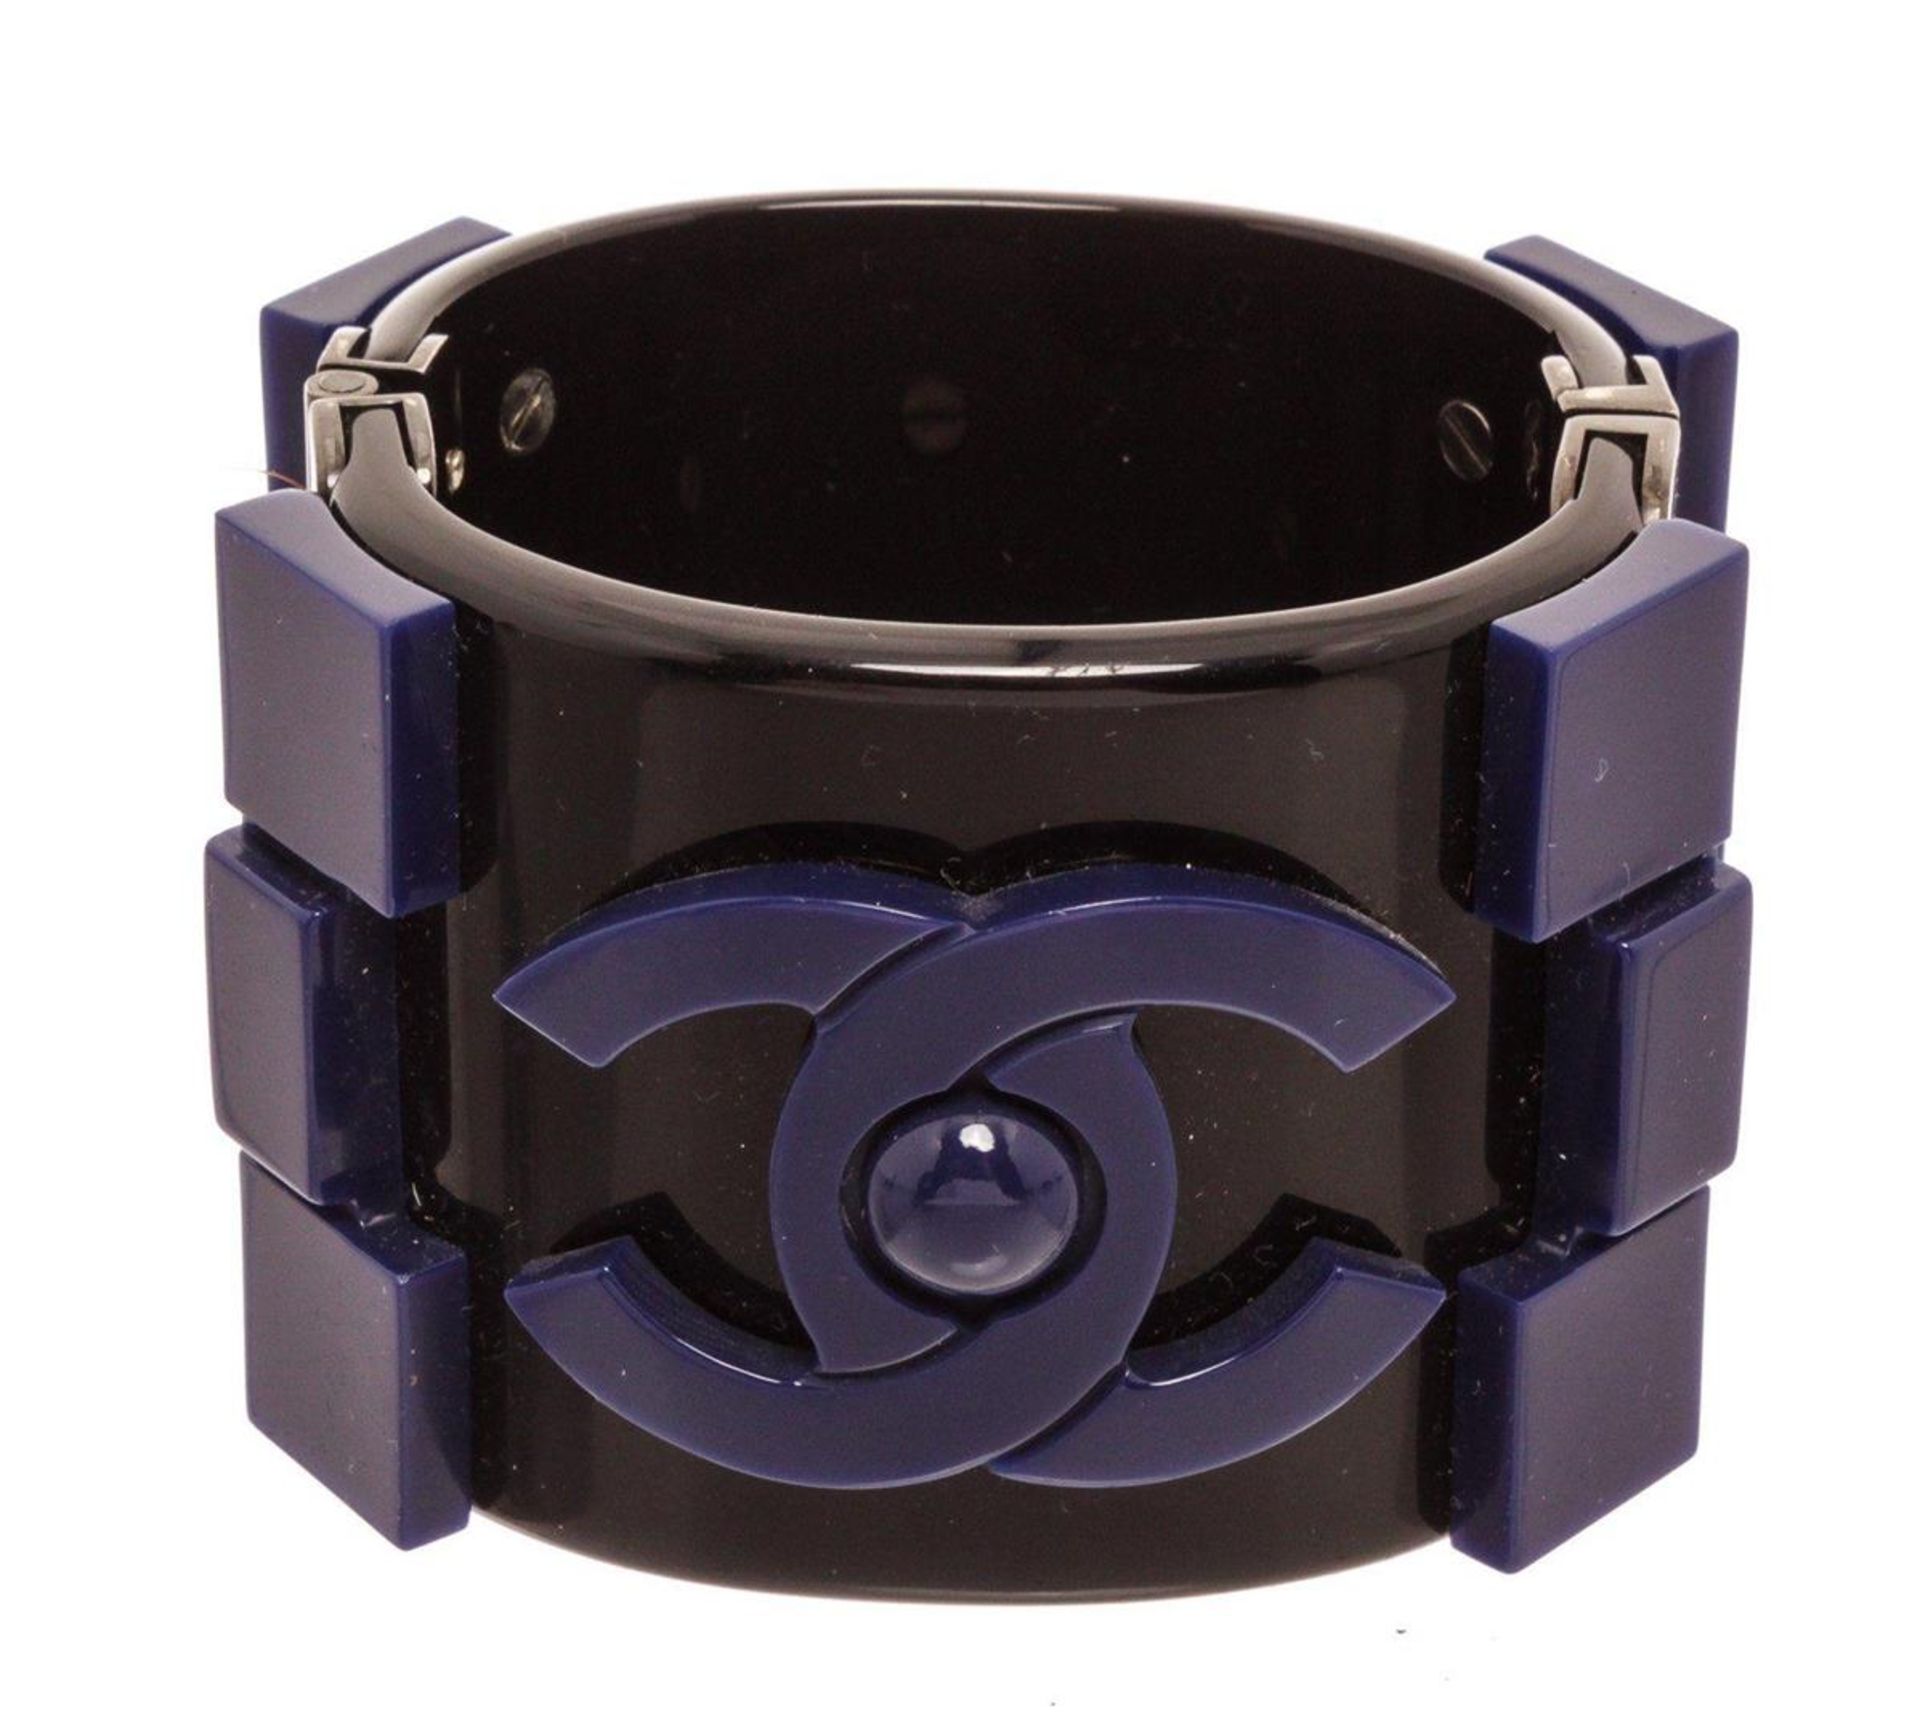 Chanel Black Blue Resin Boy Brick Bracelet